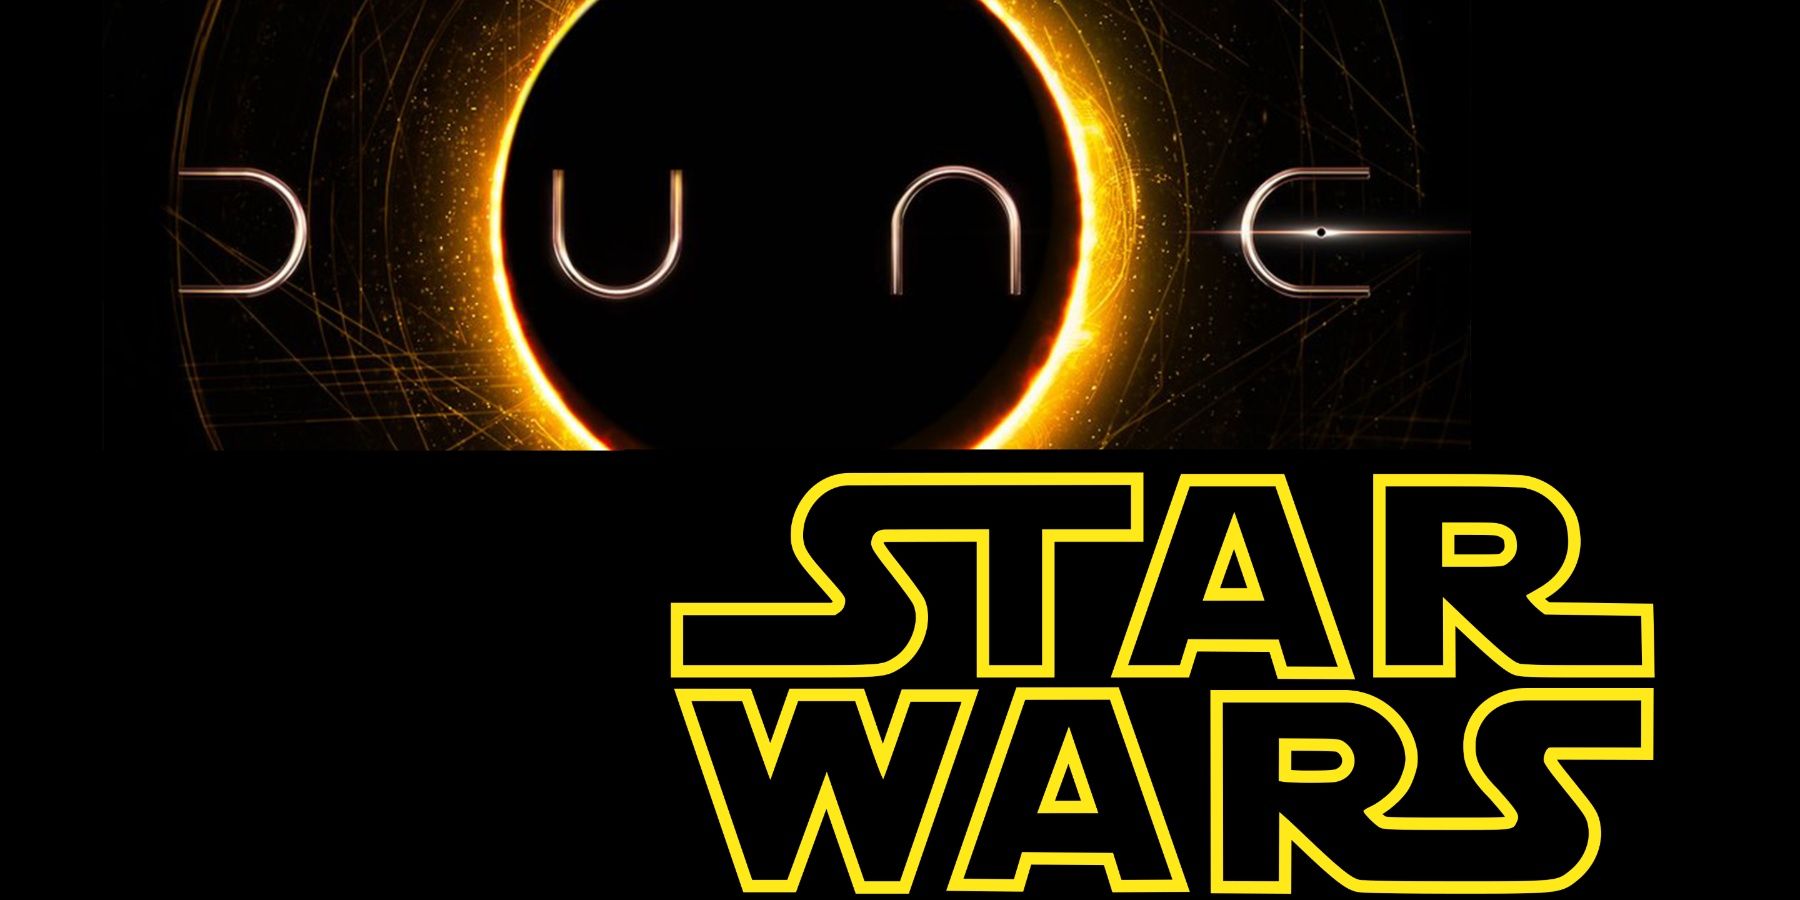 Ways Dune Influenced Star Wars